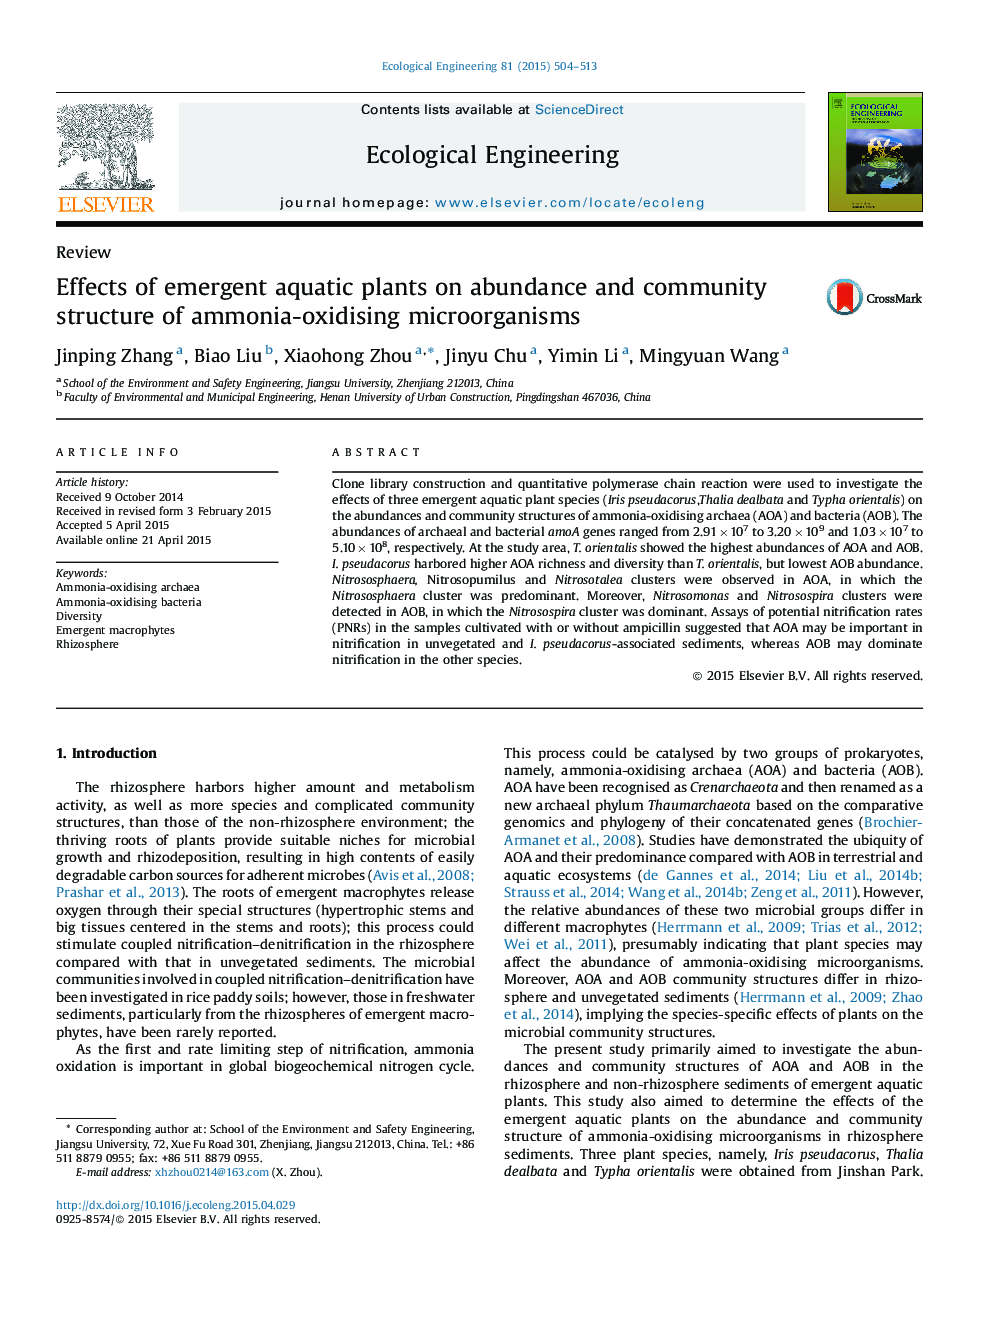 Effects of emergent aquatic plants on abundance and community structure of ammonia-oxidising microorganisms